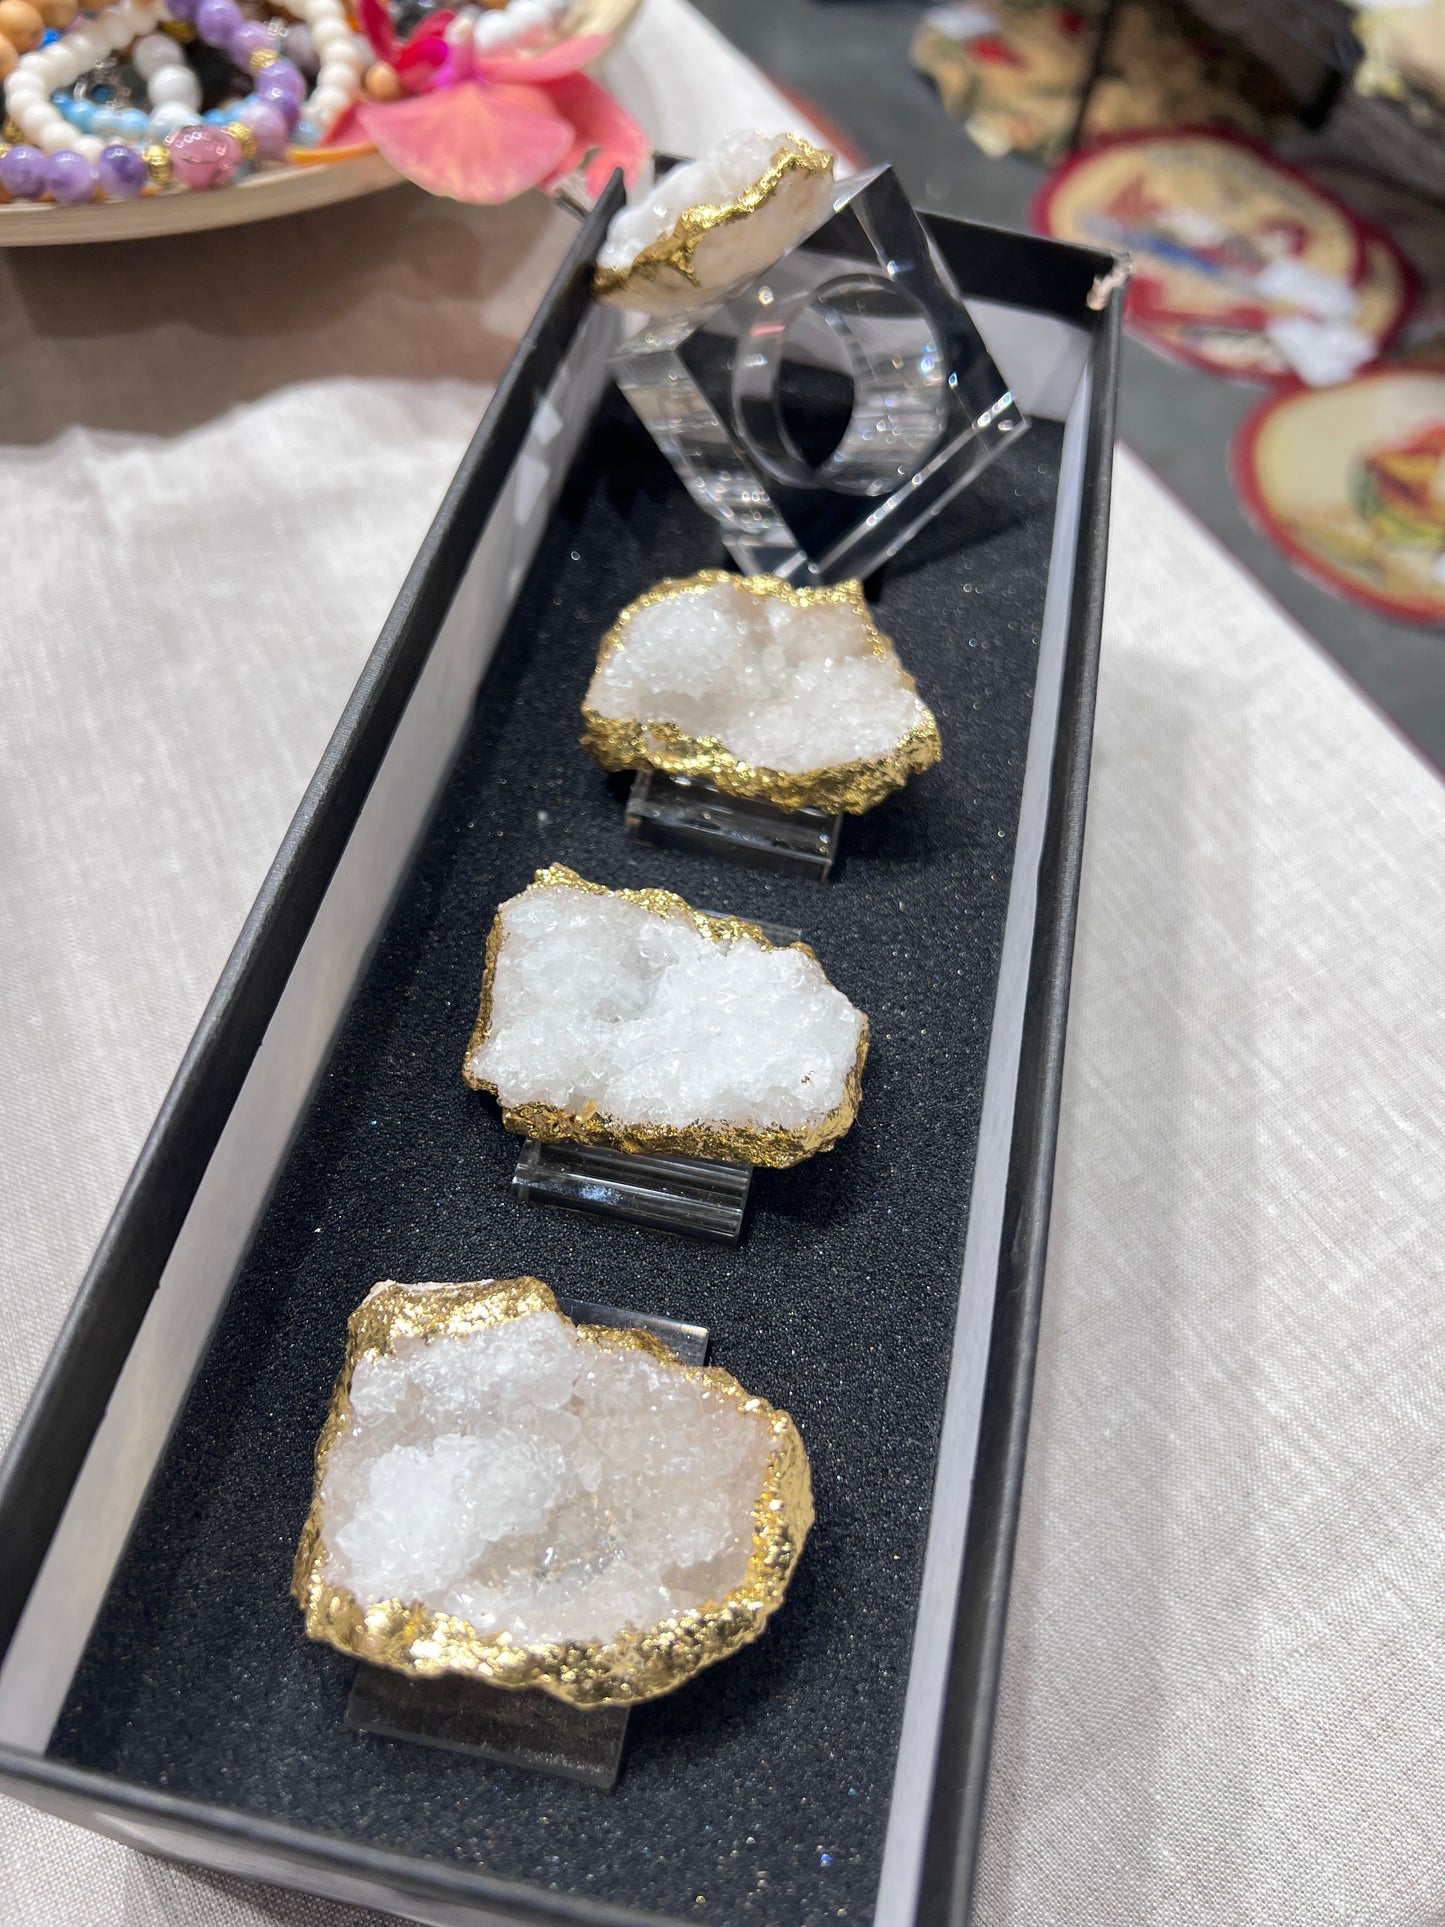 Crystal Napkin ring-quartz geodes with gold rim（SET OF 4PCS）